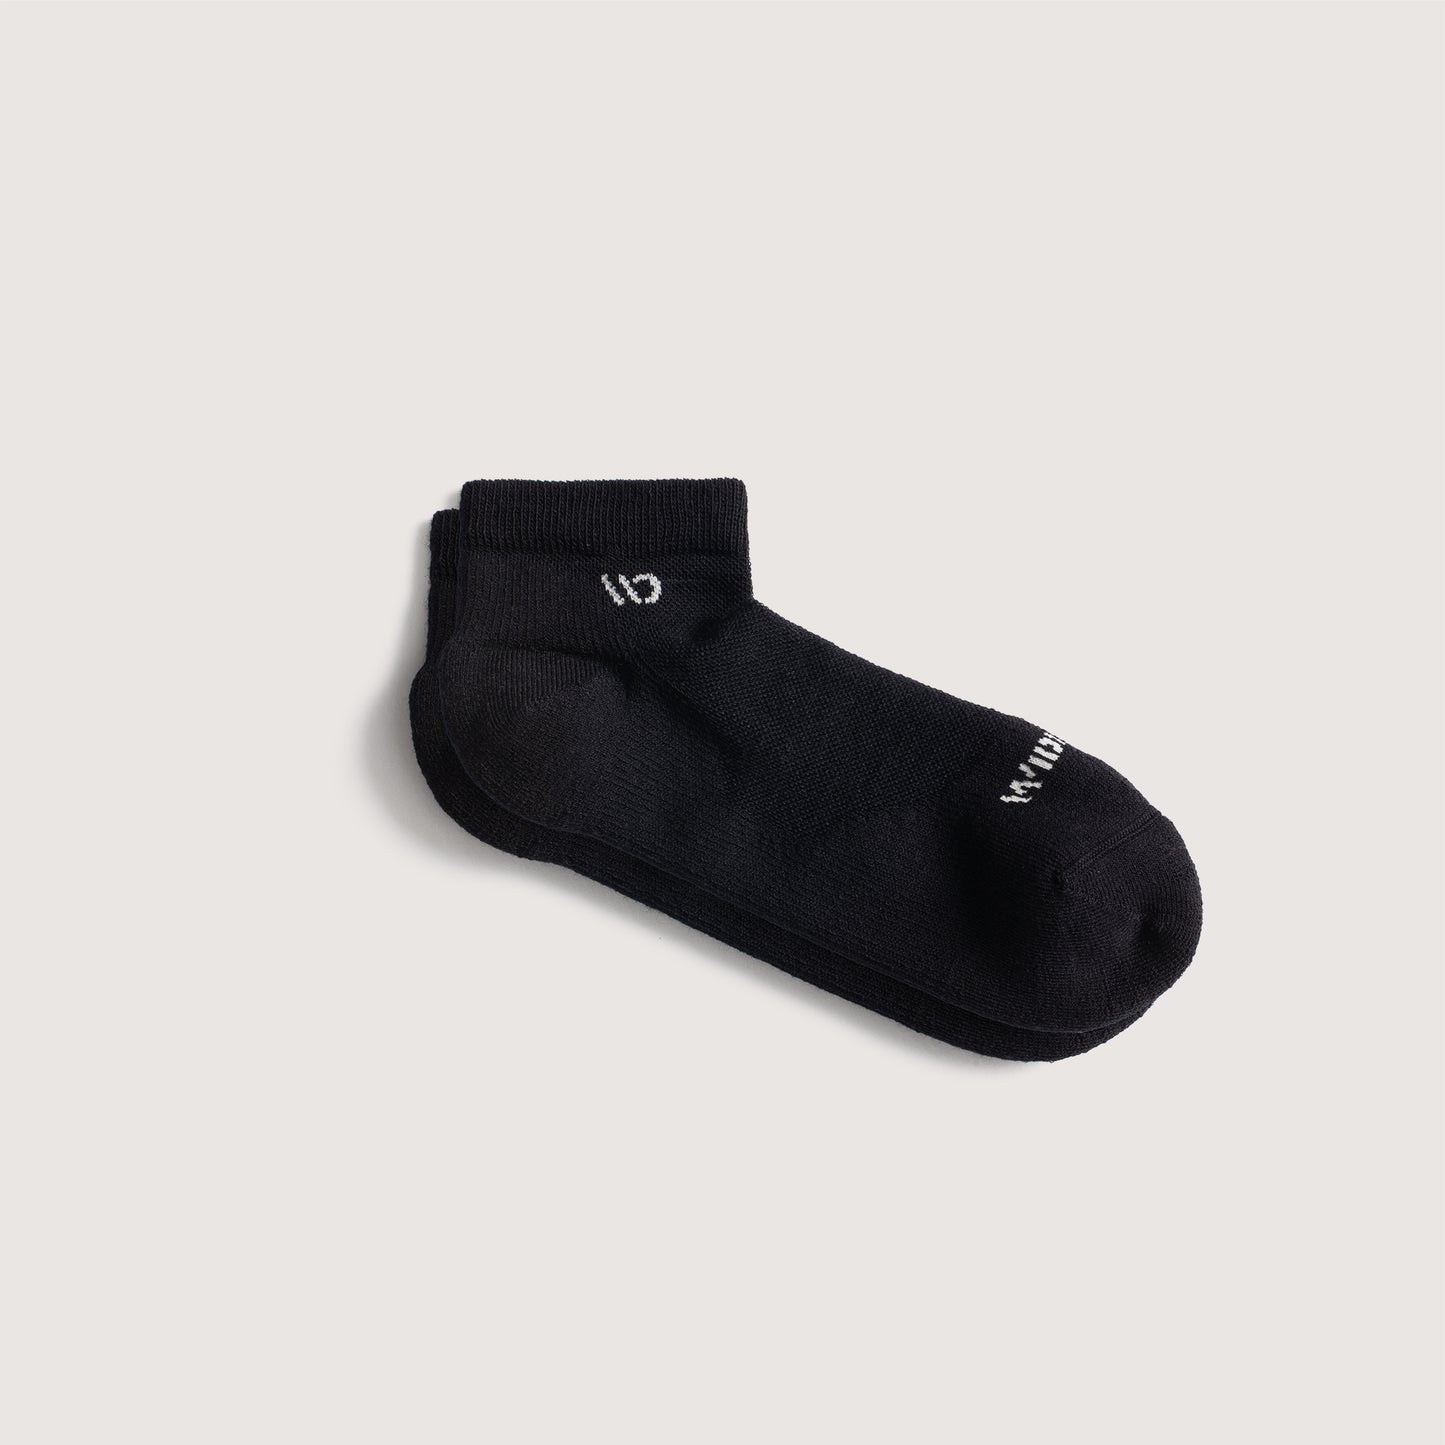 Flat socks, featuring white logo, with Black body --Black